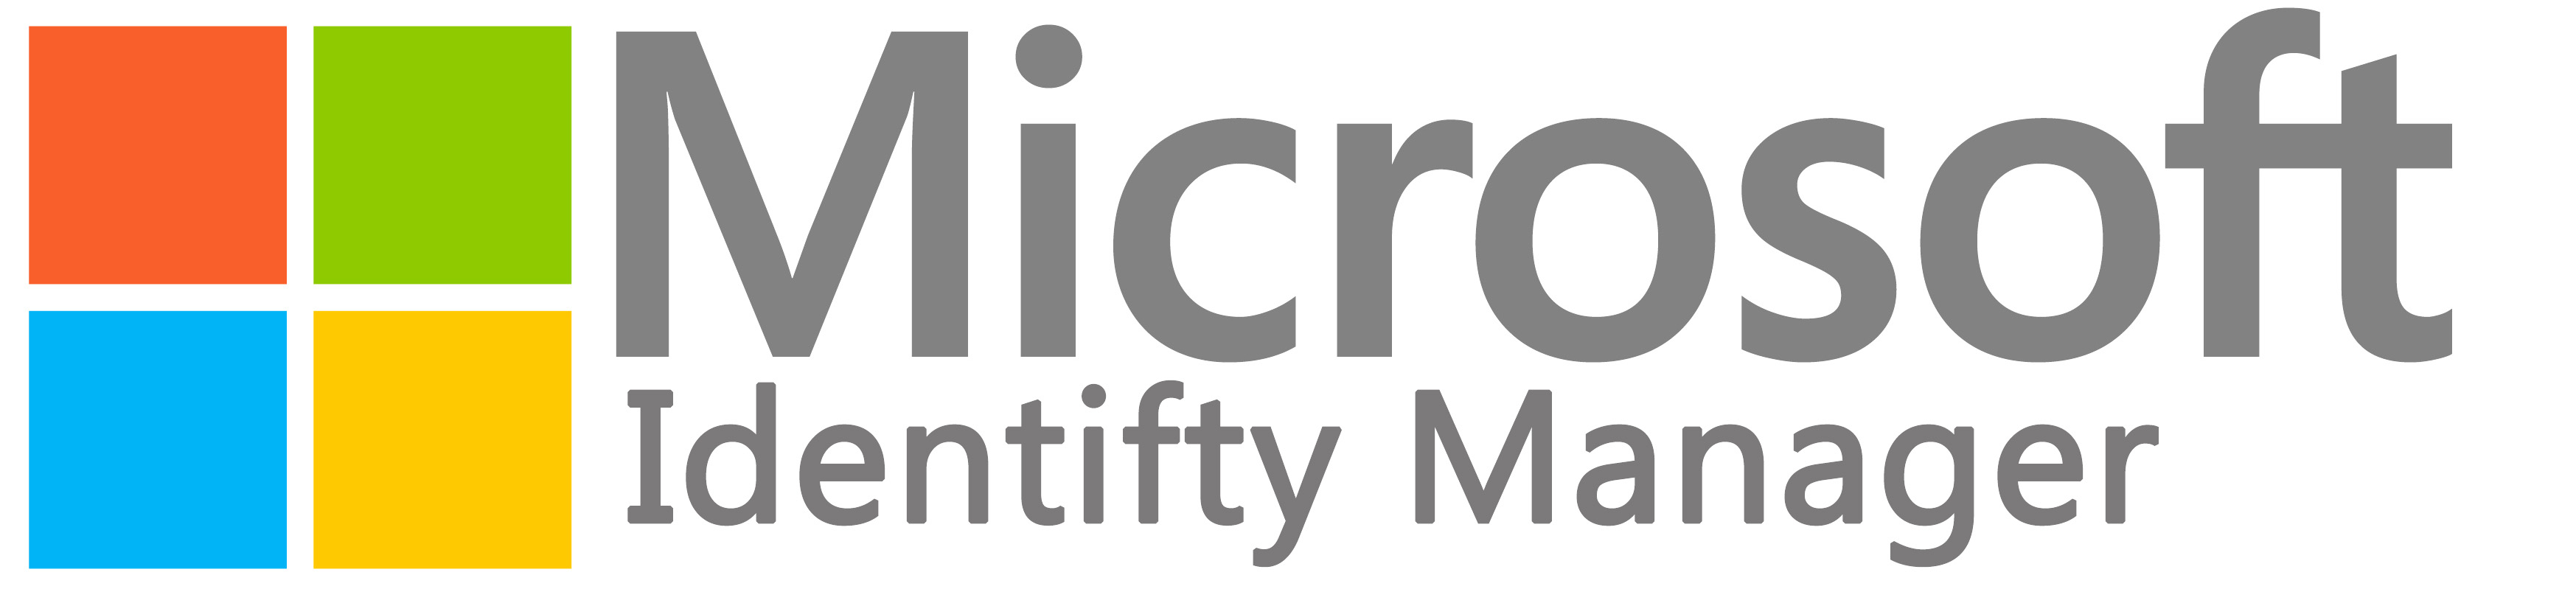 Right manager. Microsoft Identity. Microsoft Identity Manager cal. Microsoft на покупках. Microsoft Identity Manager logo.